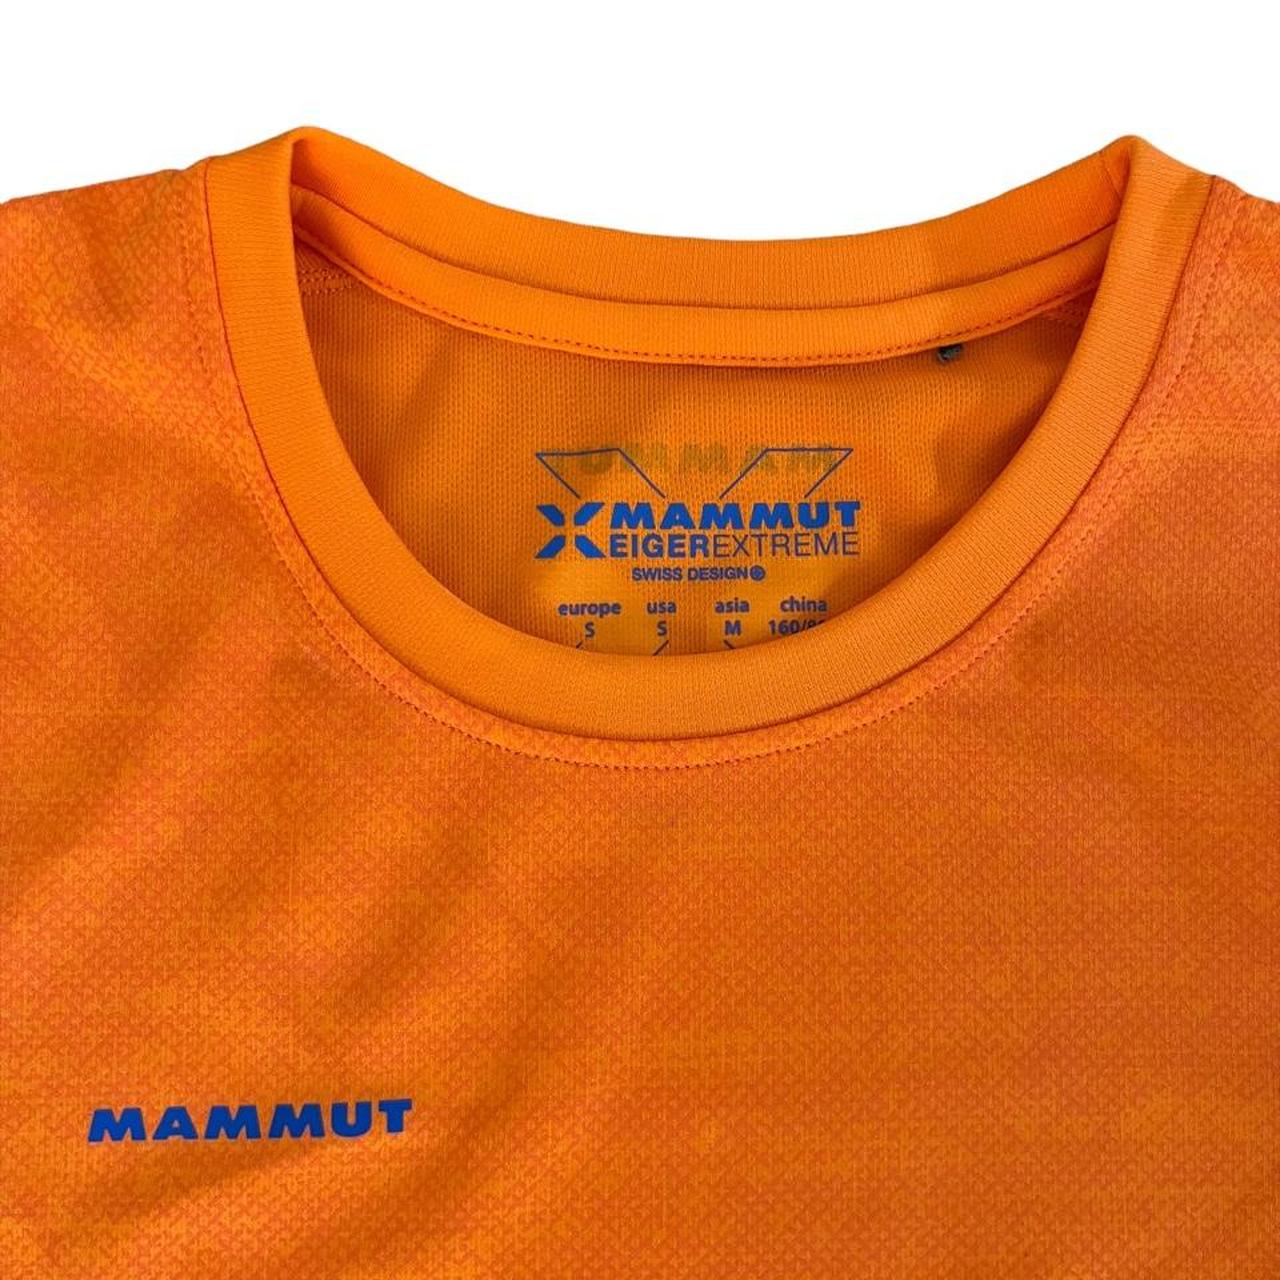 Mammut Women's Orange and Blue Top (2)